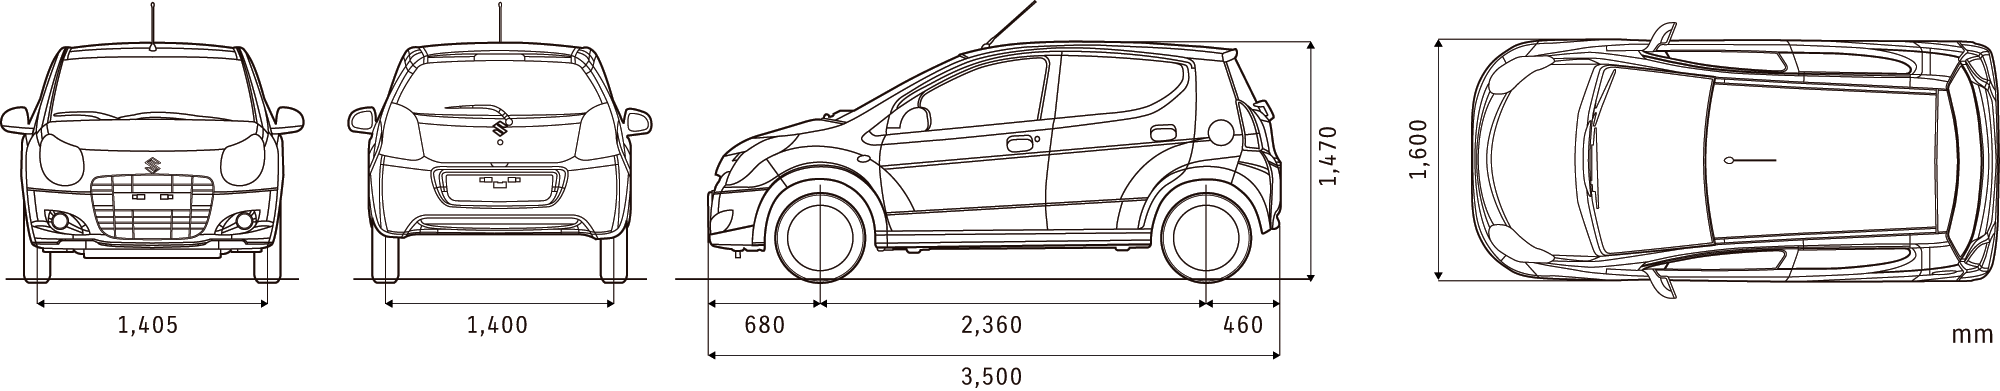 Suzuki Alto blueprint